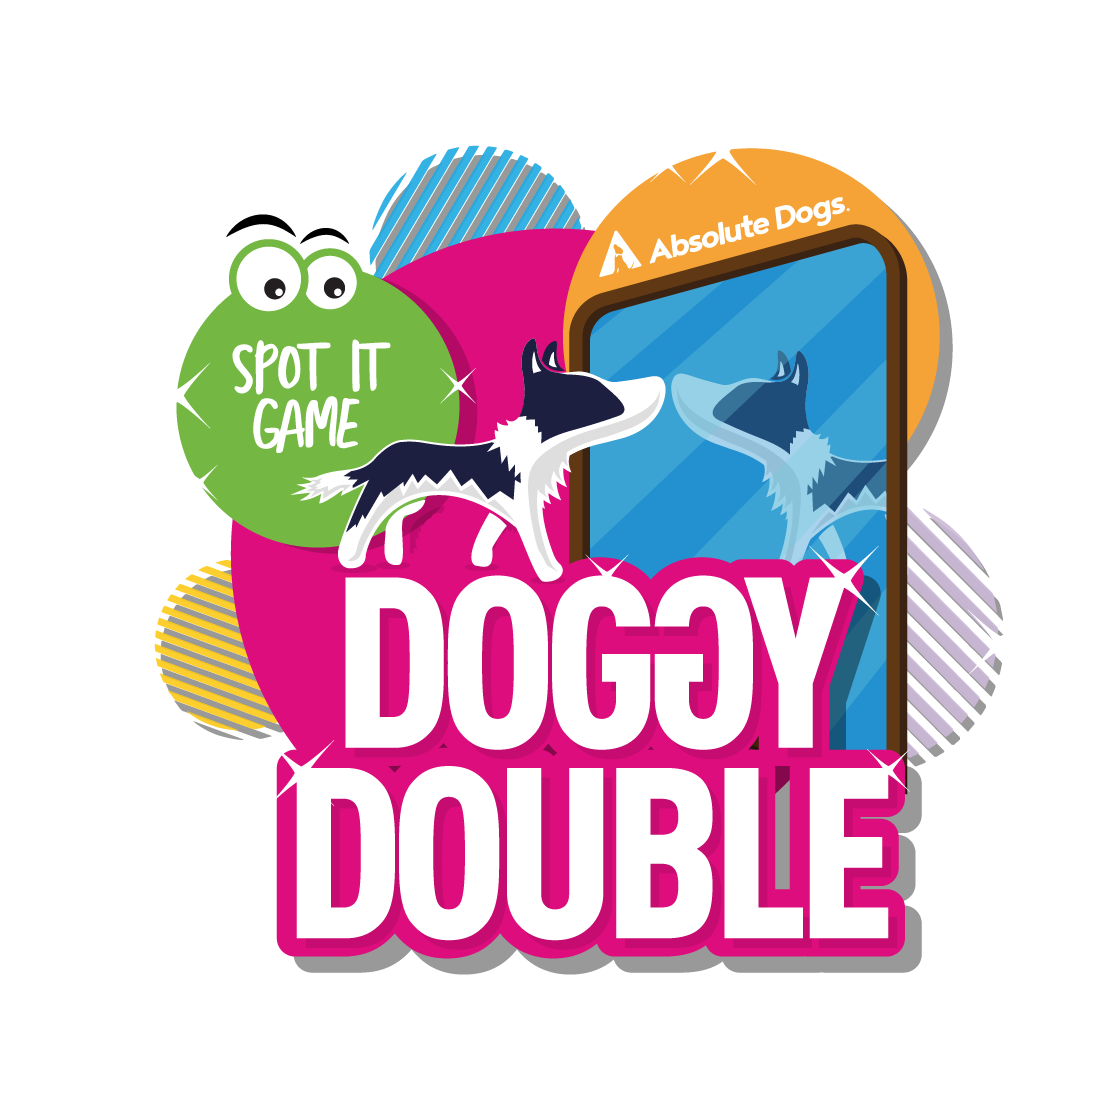 Doggy Double